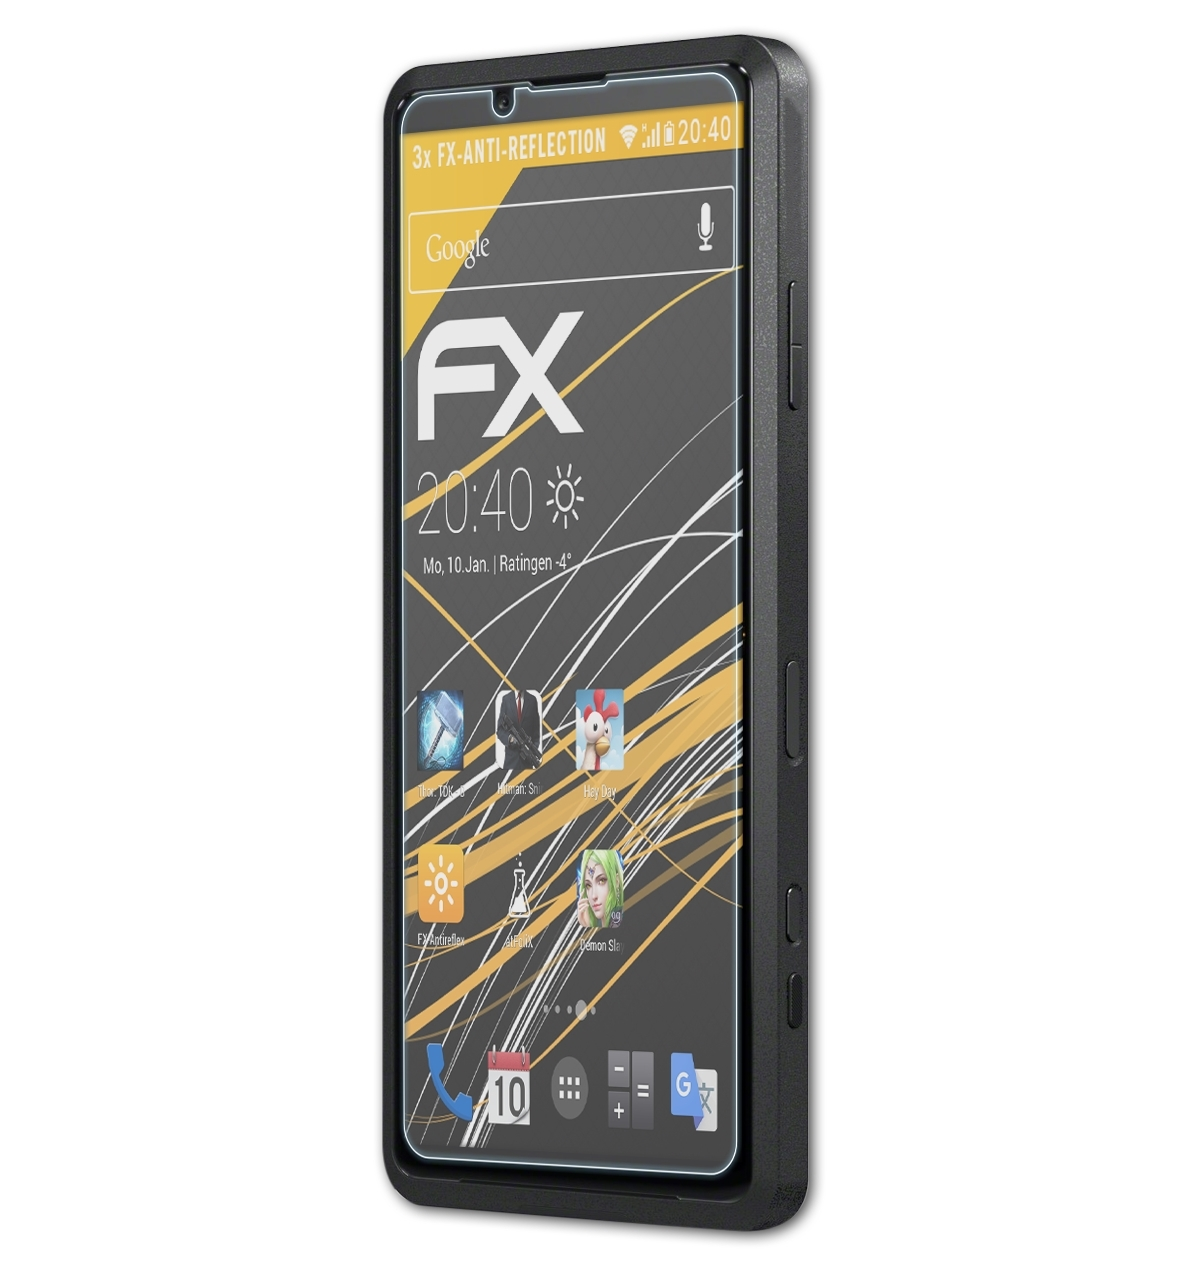 Pro) 3x FX-Antireflex Sony Xperia ATFOLIX Displayschutz(für